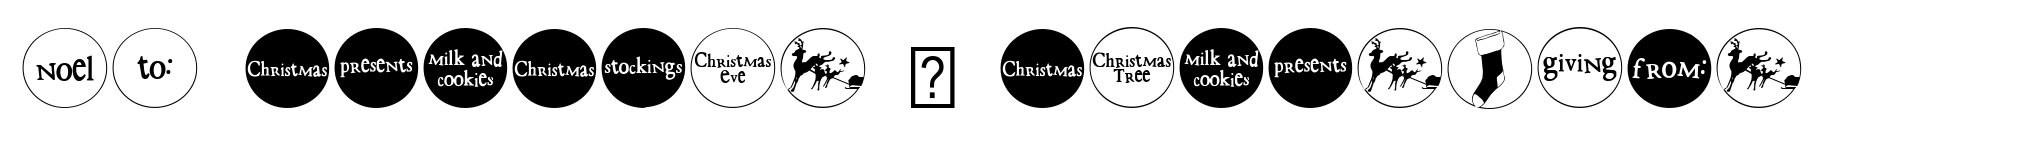 DB Circles - Christmas image